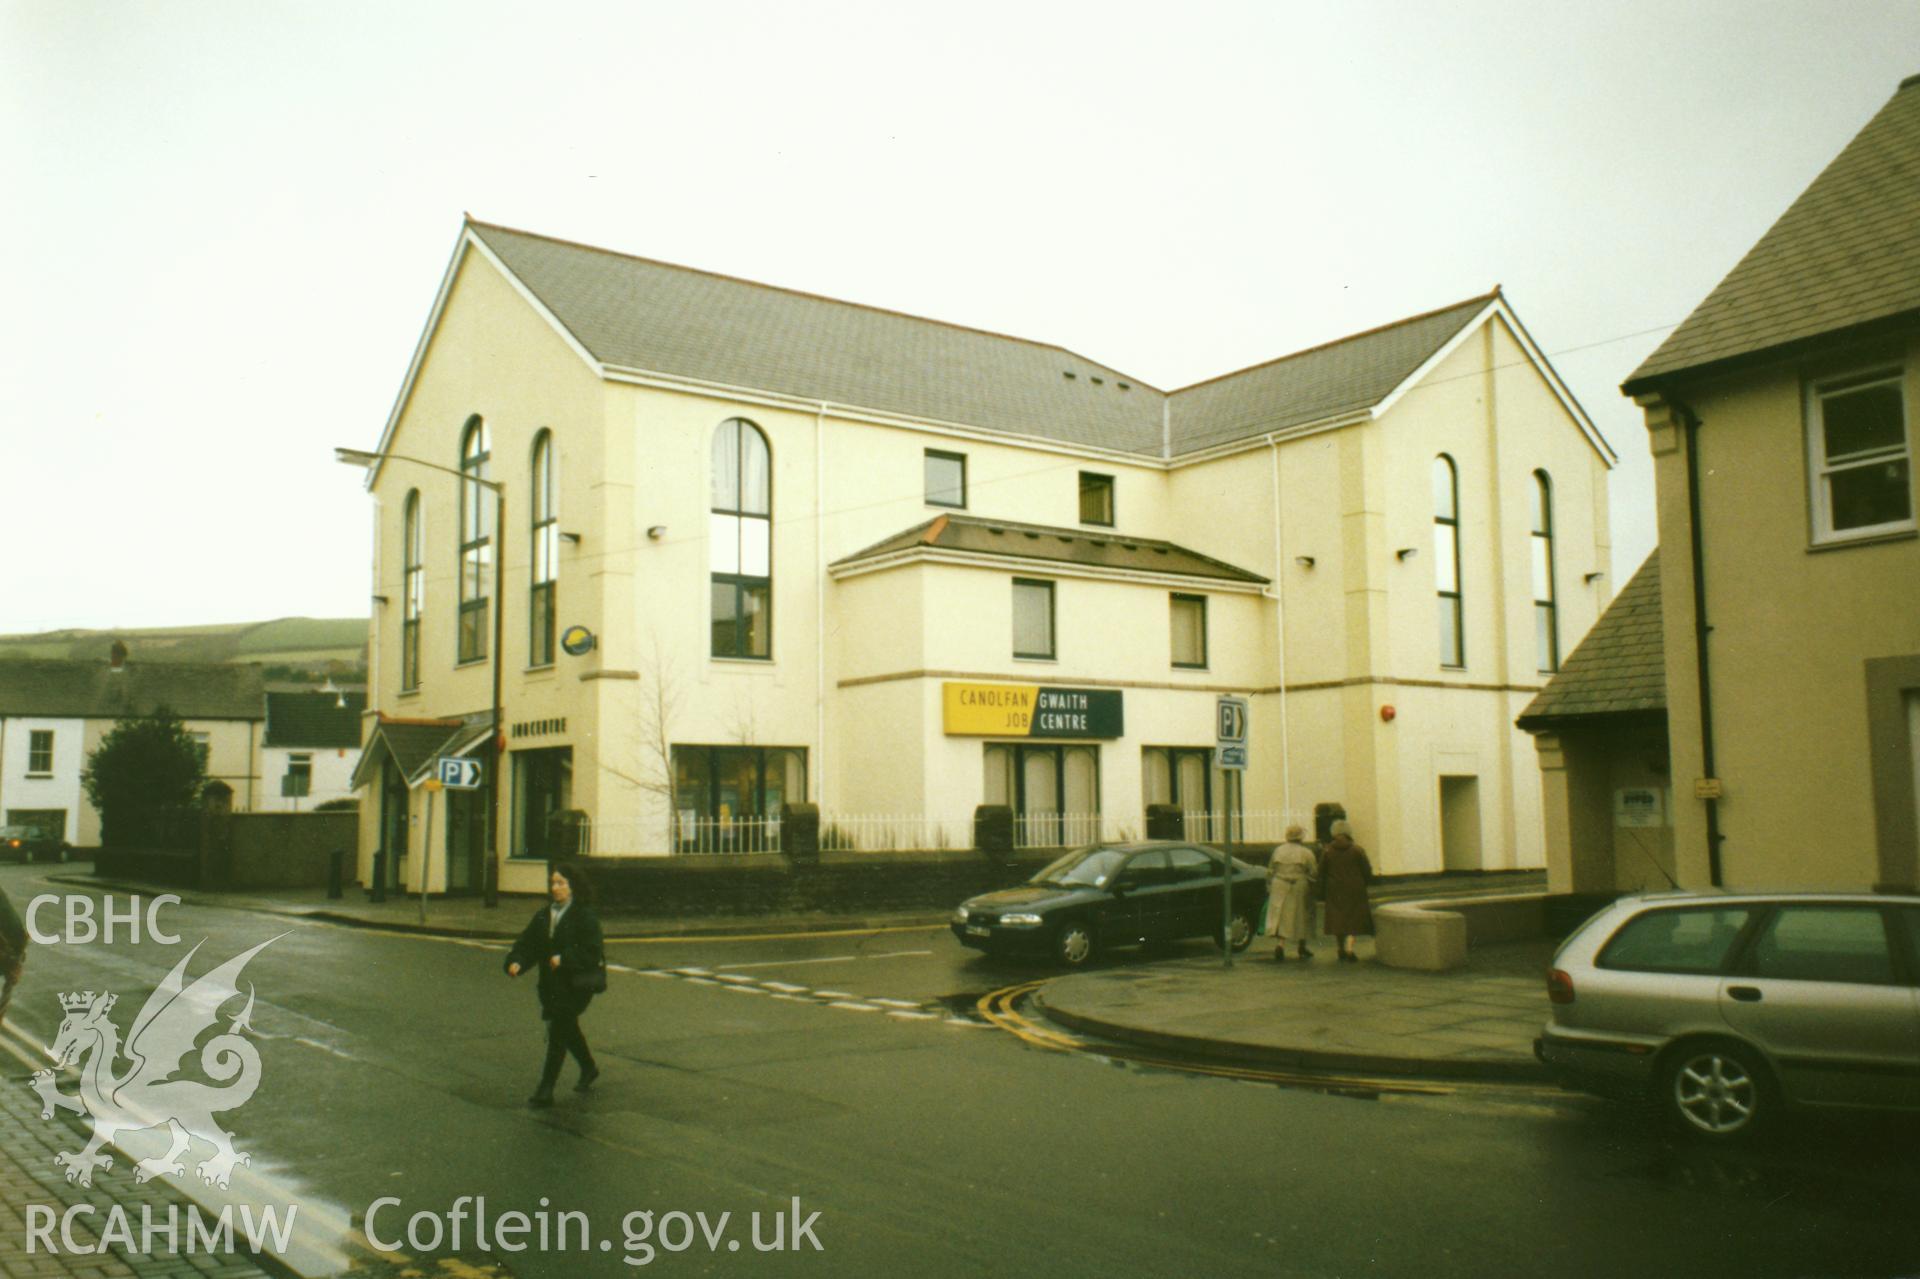 Digital copy of a colour photograph showing an exterior view of the Ebenezer Welsh Wesleyan Methodist Chapel, Carmarthen, taken by Robert Scourfield, c.1996.